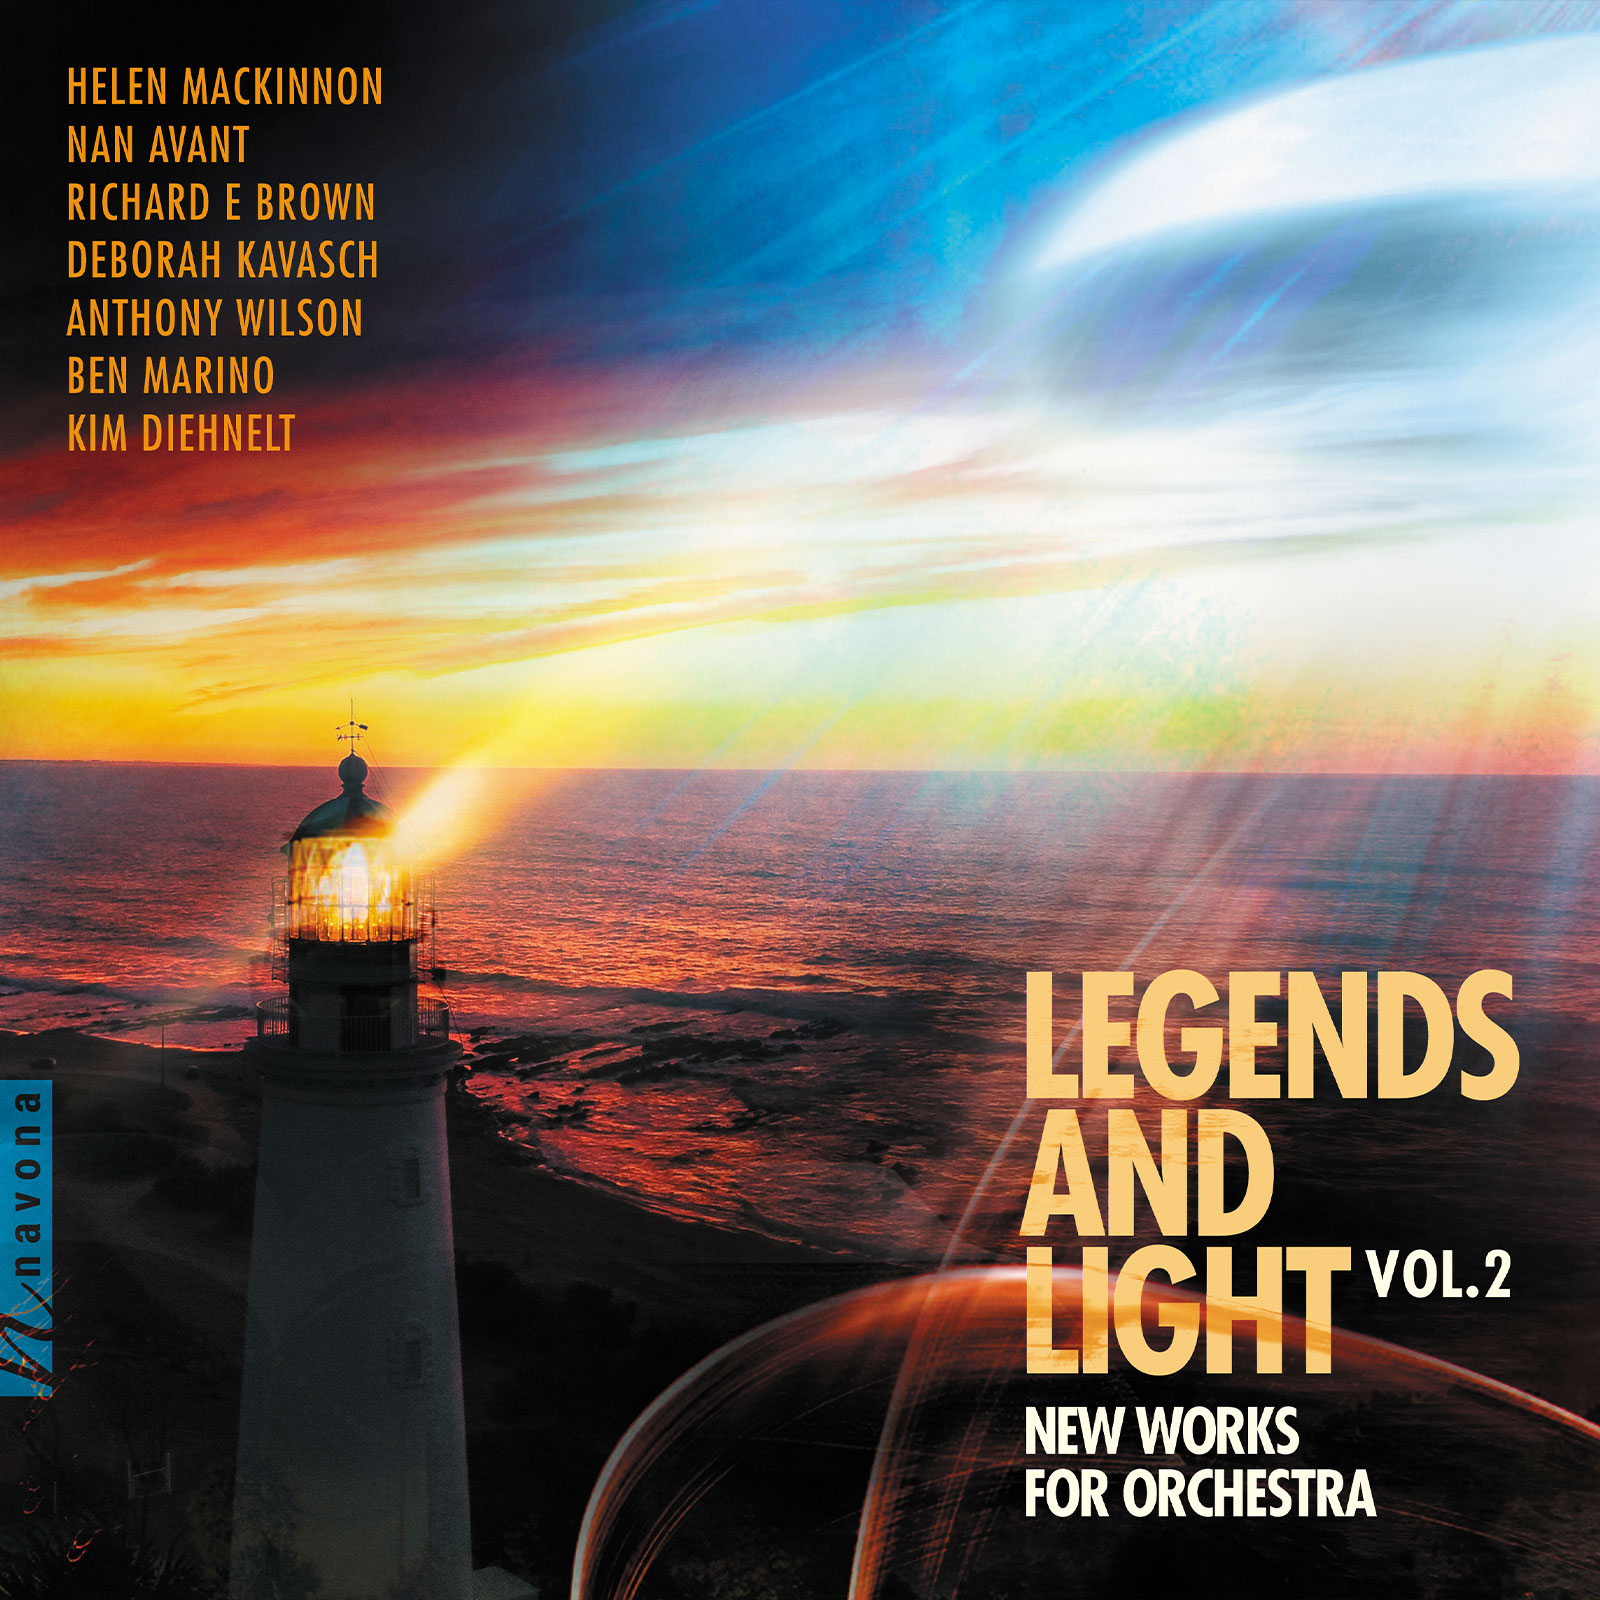 Legends and Light Vol. 2